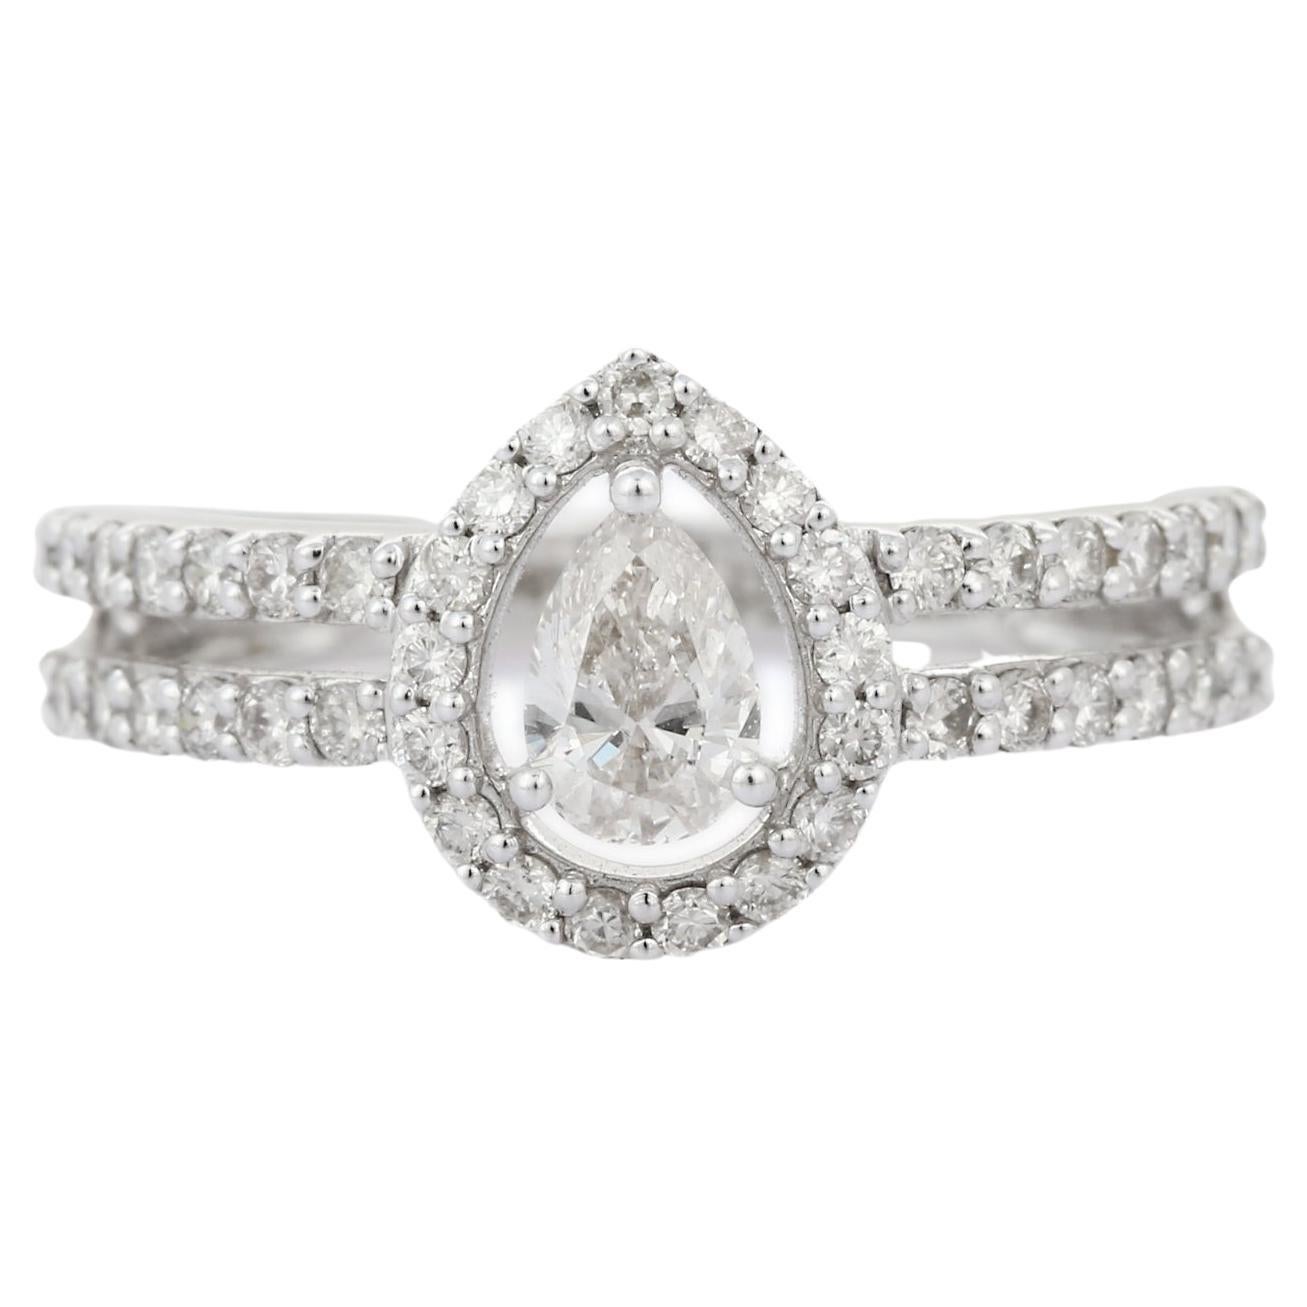 14K White Gold Pear Cut Diamond Engagement Ring